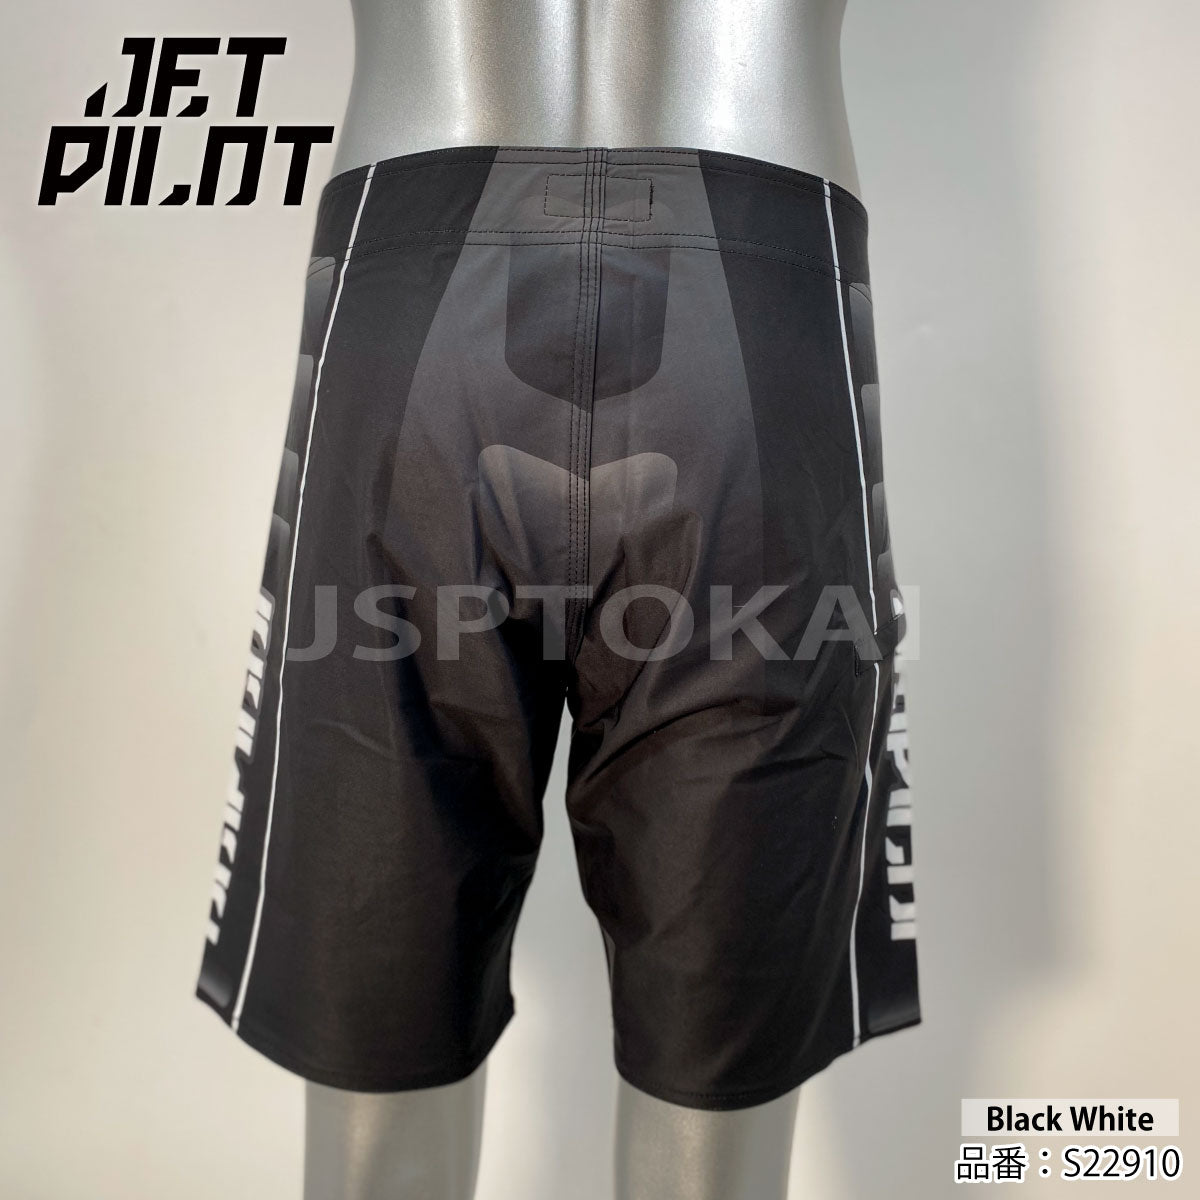 [SALE] JETPILOT Jet Pilot PODIUM MEN'S BOARDSHORTS Board Shorts S22910